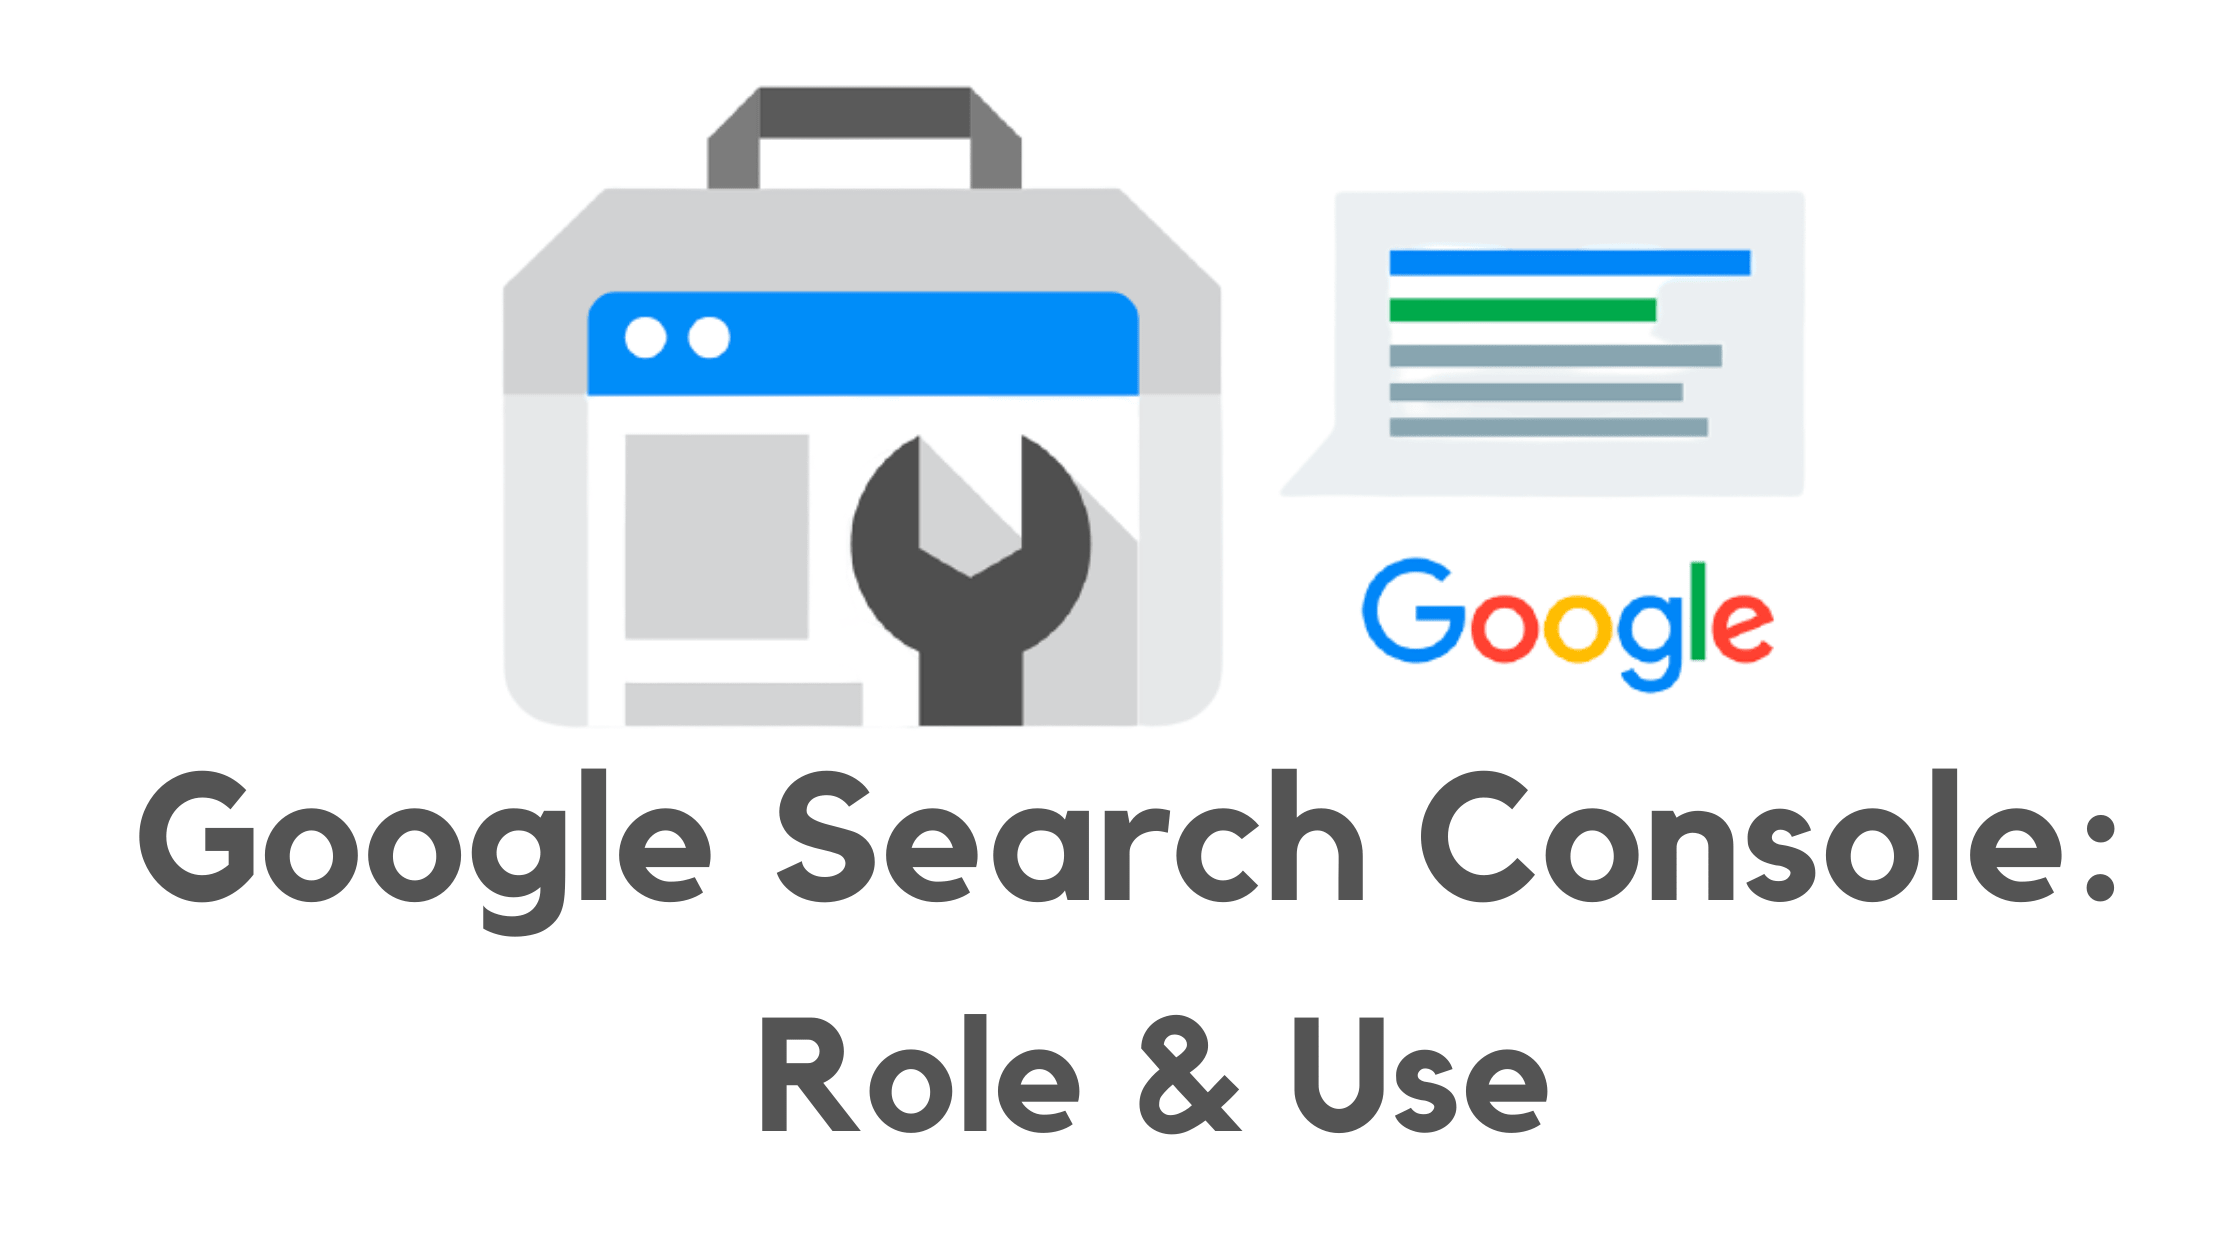 Google Search Console Role & Use